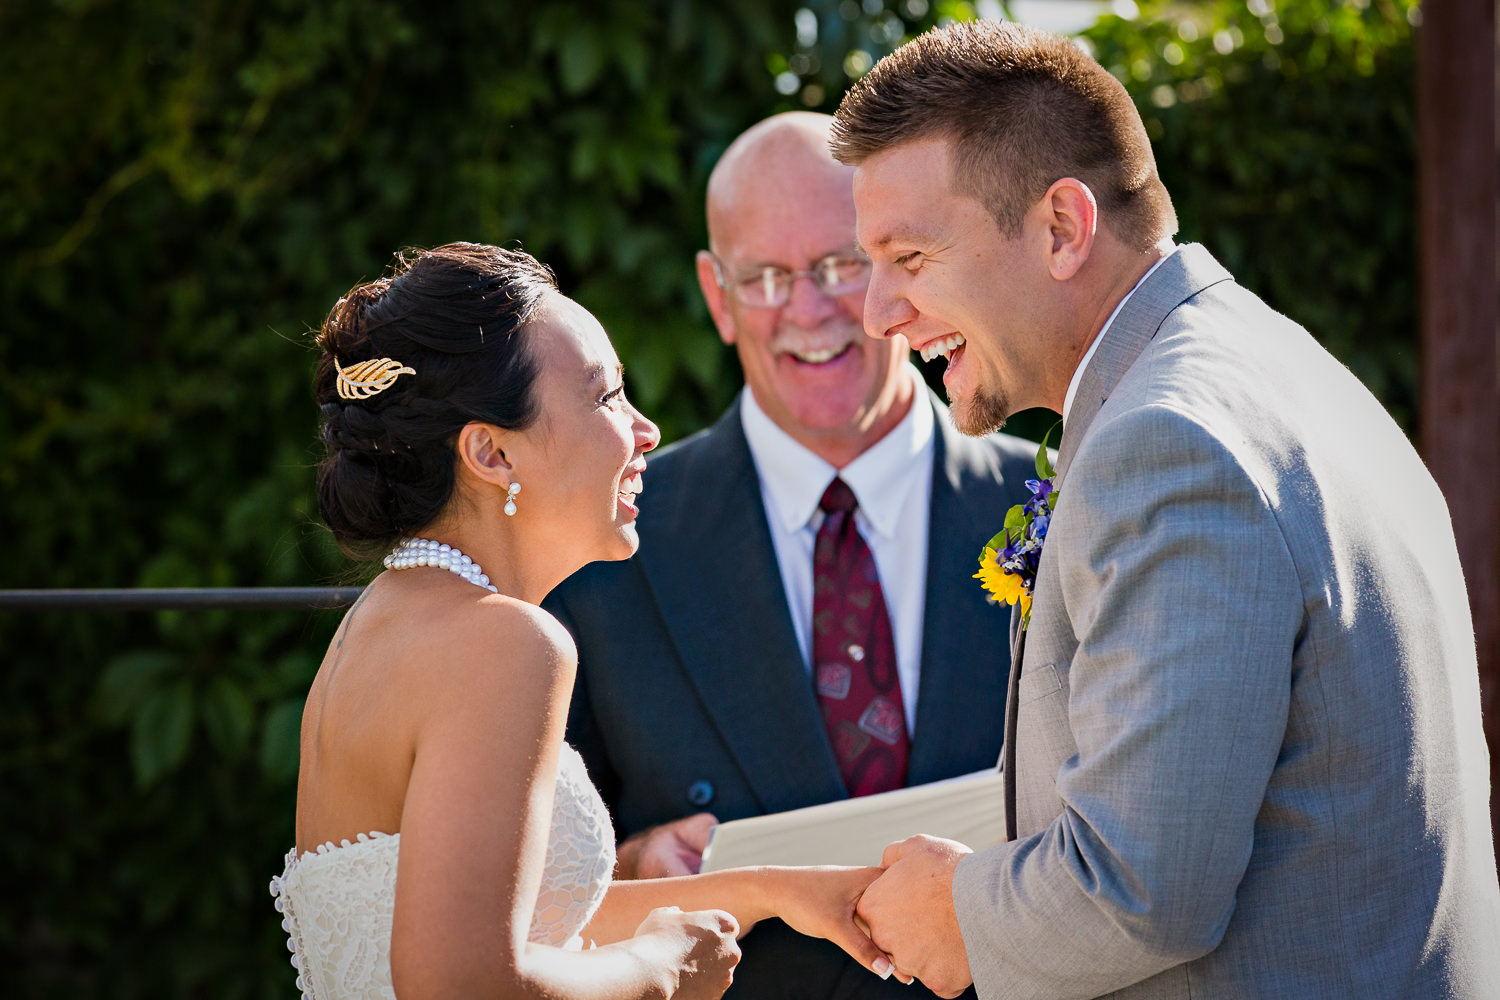 billings-montana-chanceys-wedding-ceremony-groom-bride-laughing.jpg